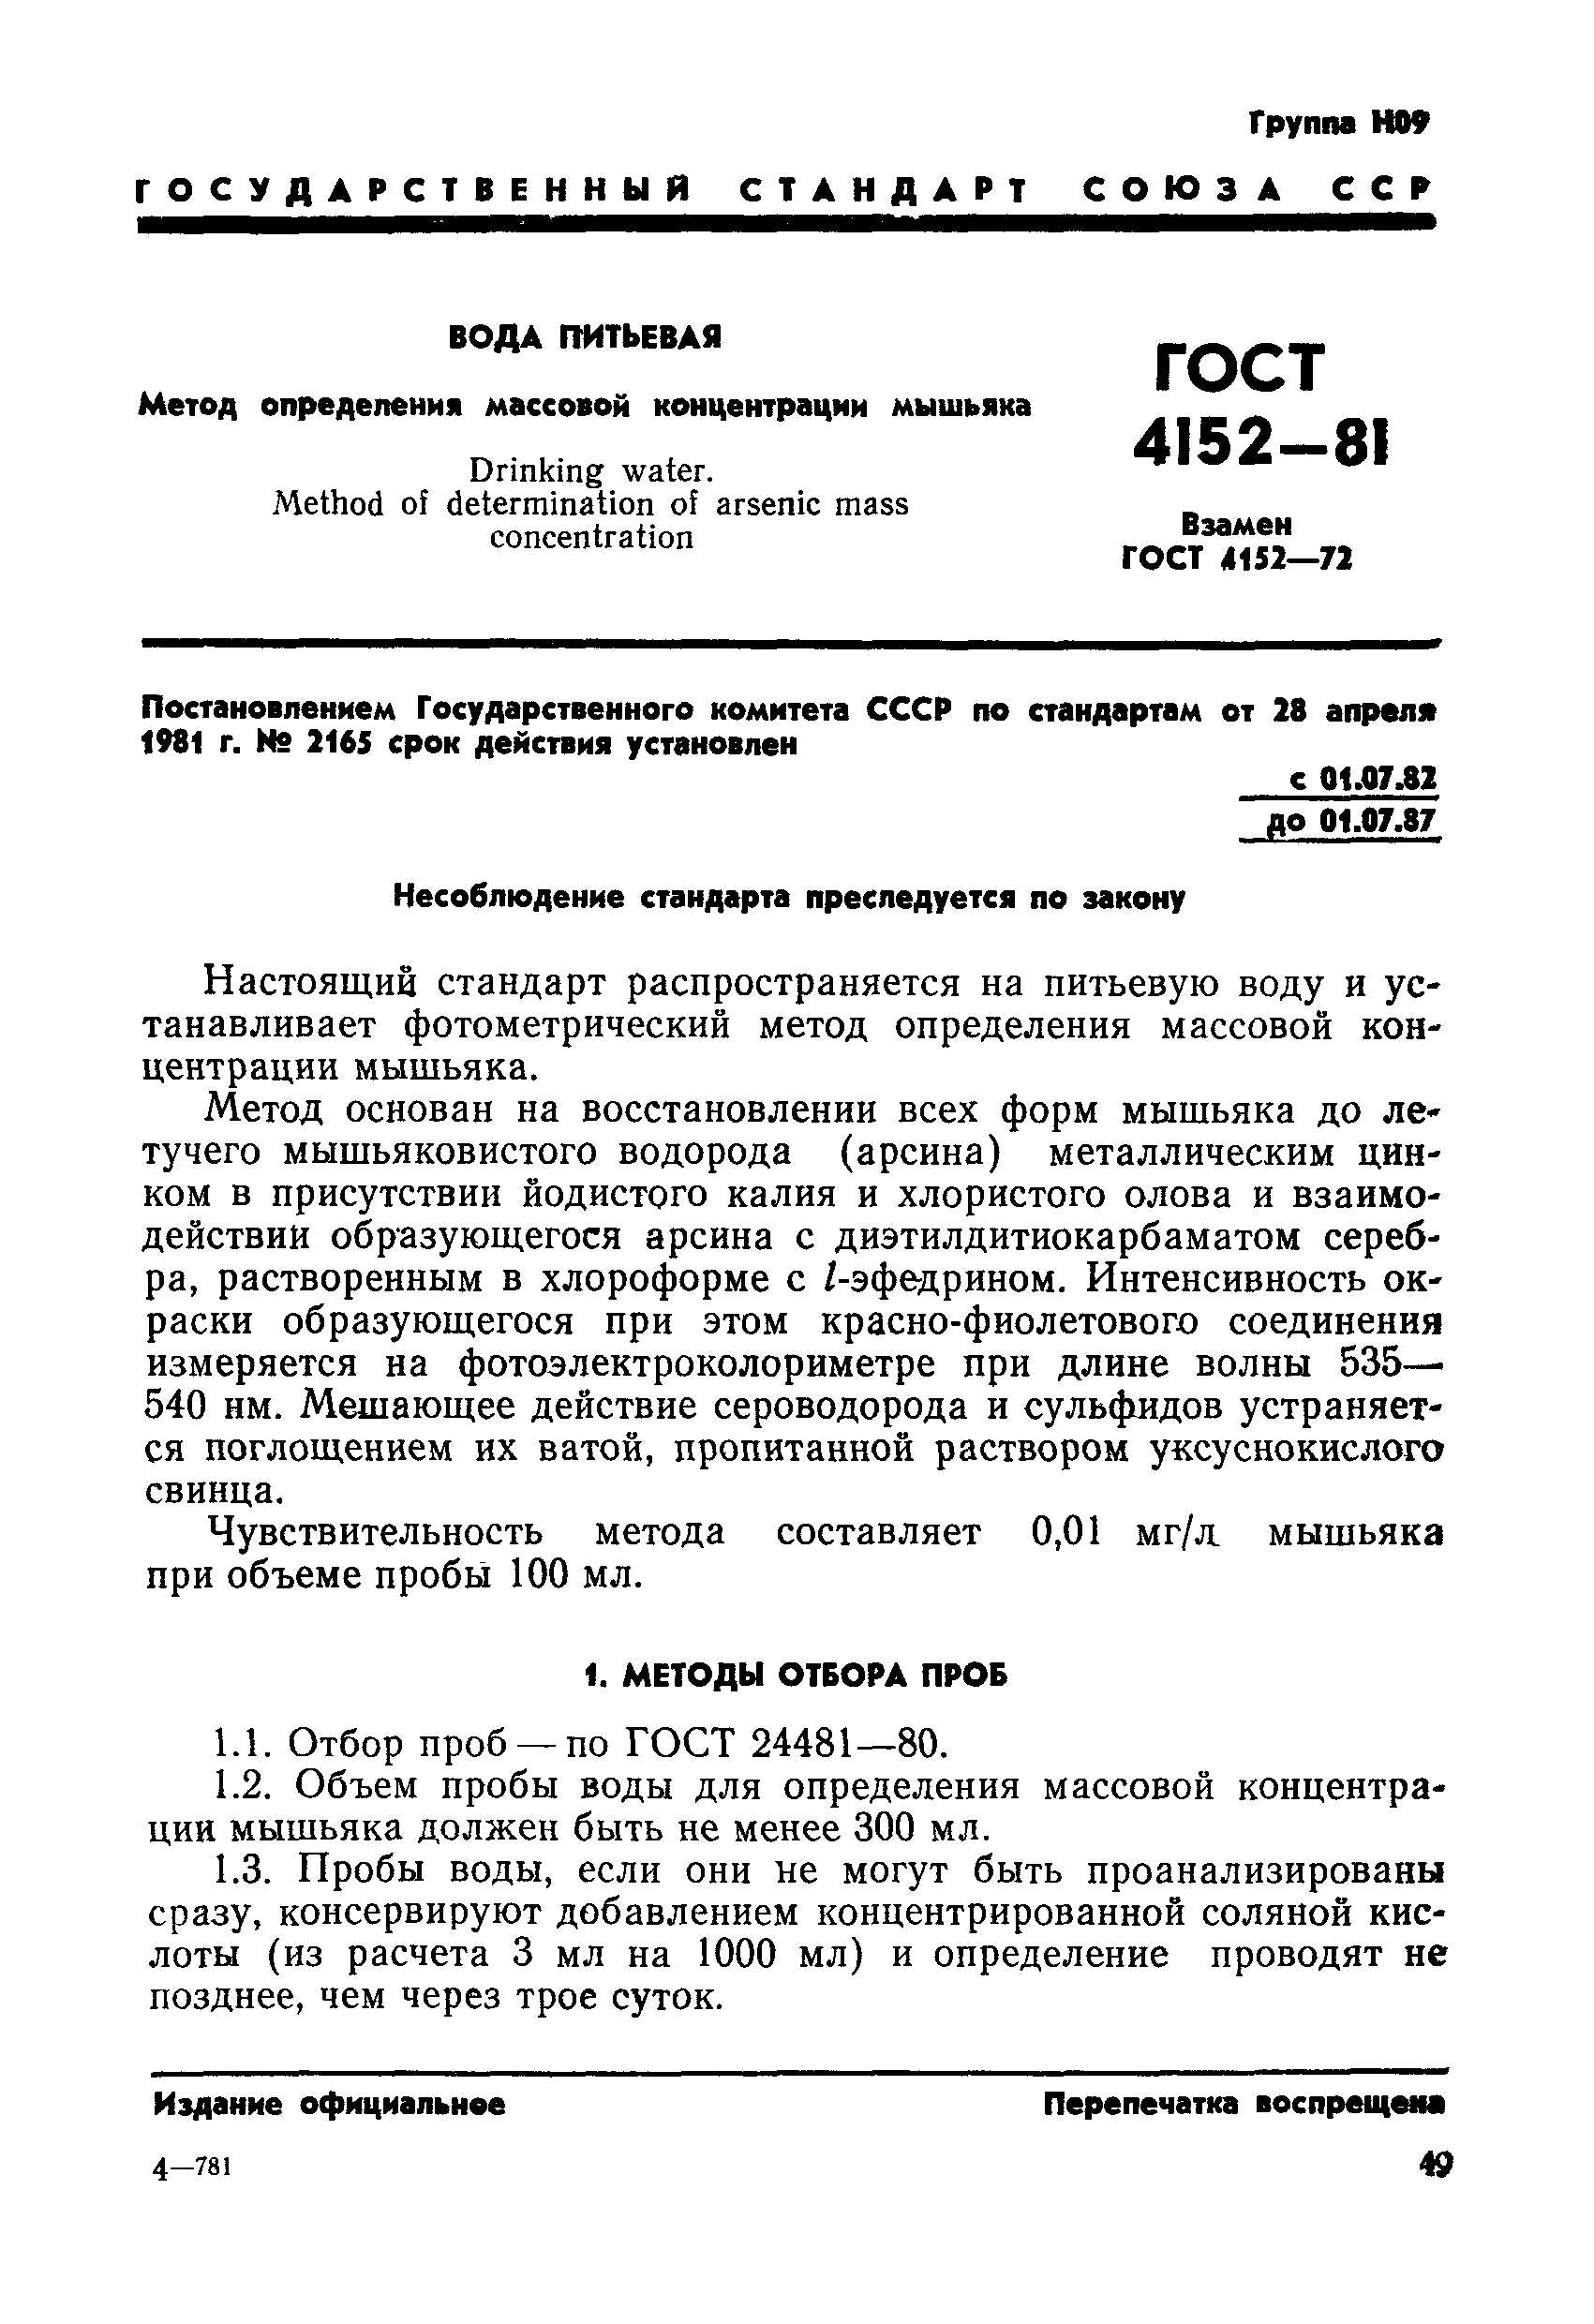 ГОСТ 4152-81